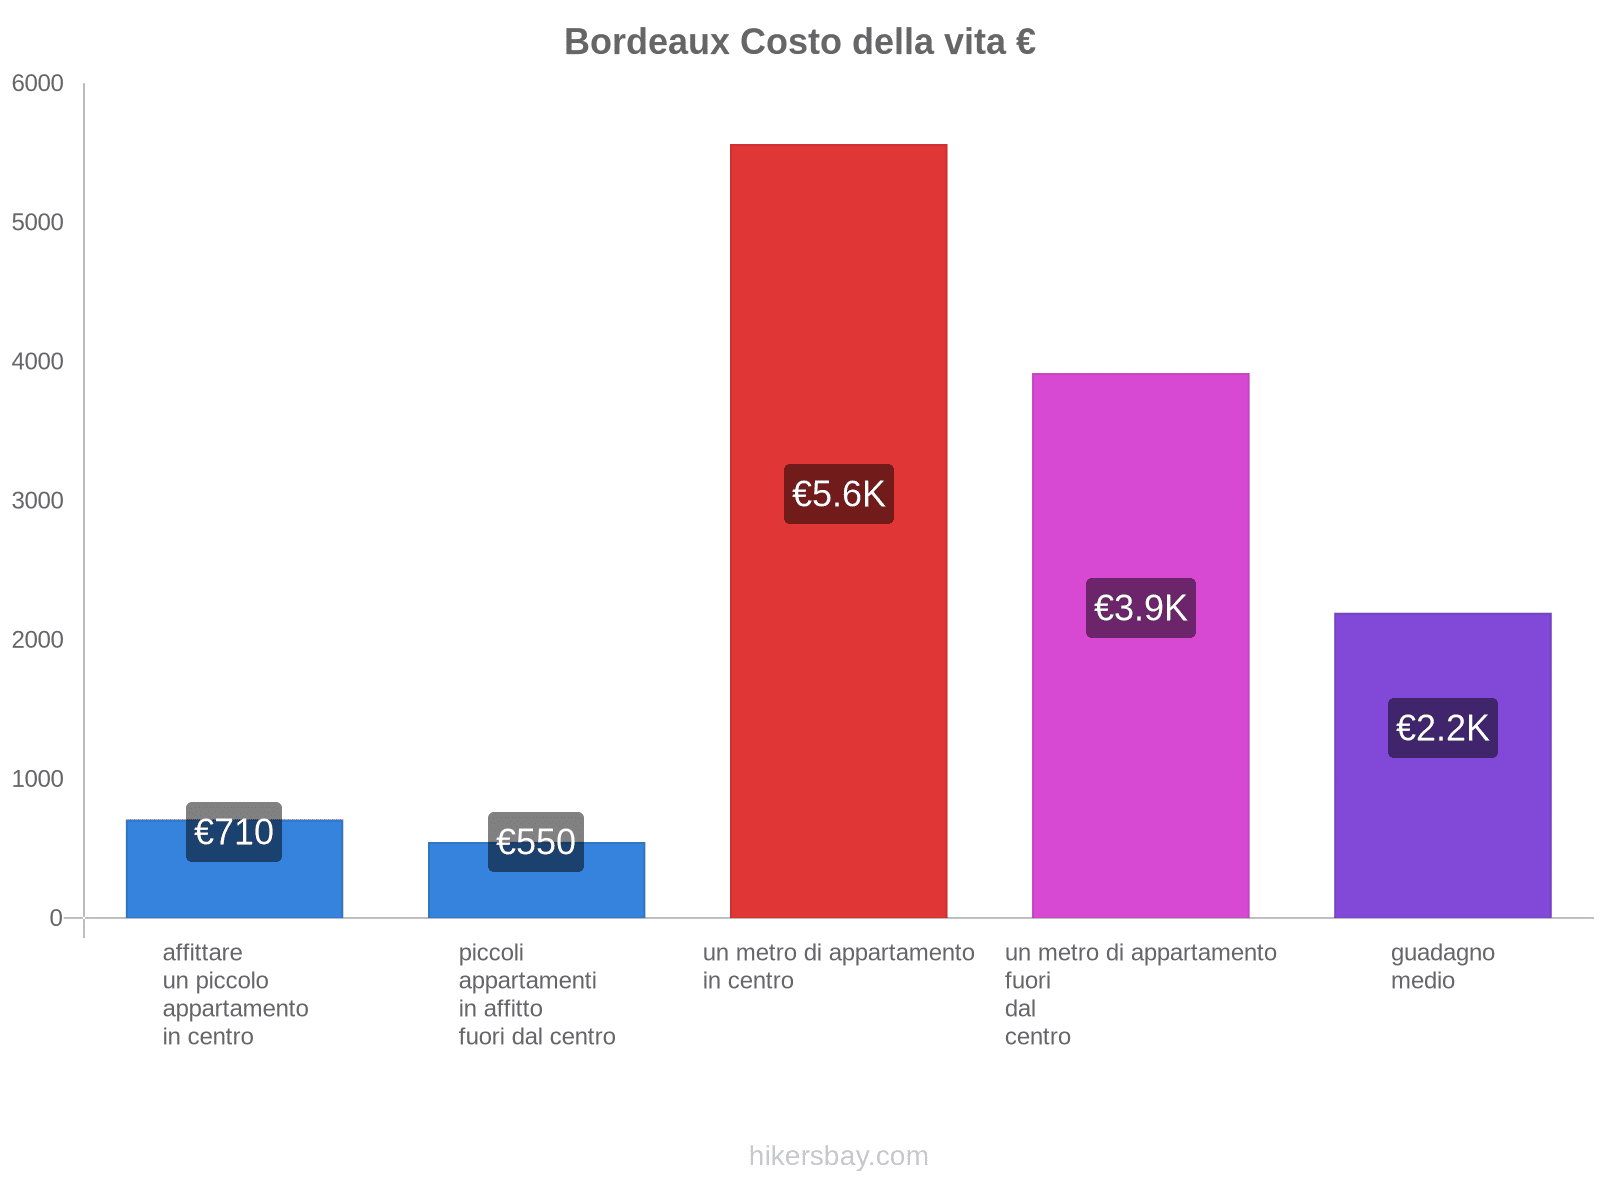 Bordeaux costo della vita hikersbay.com